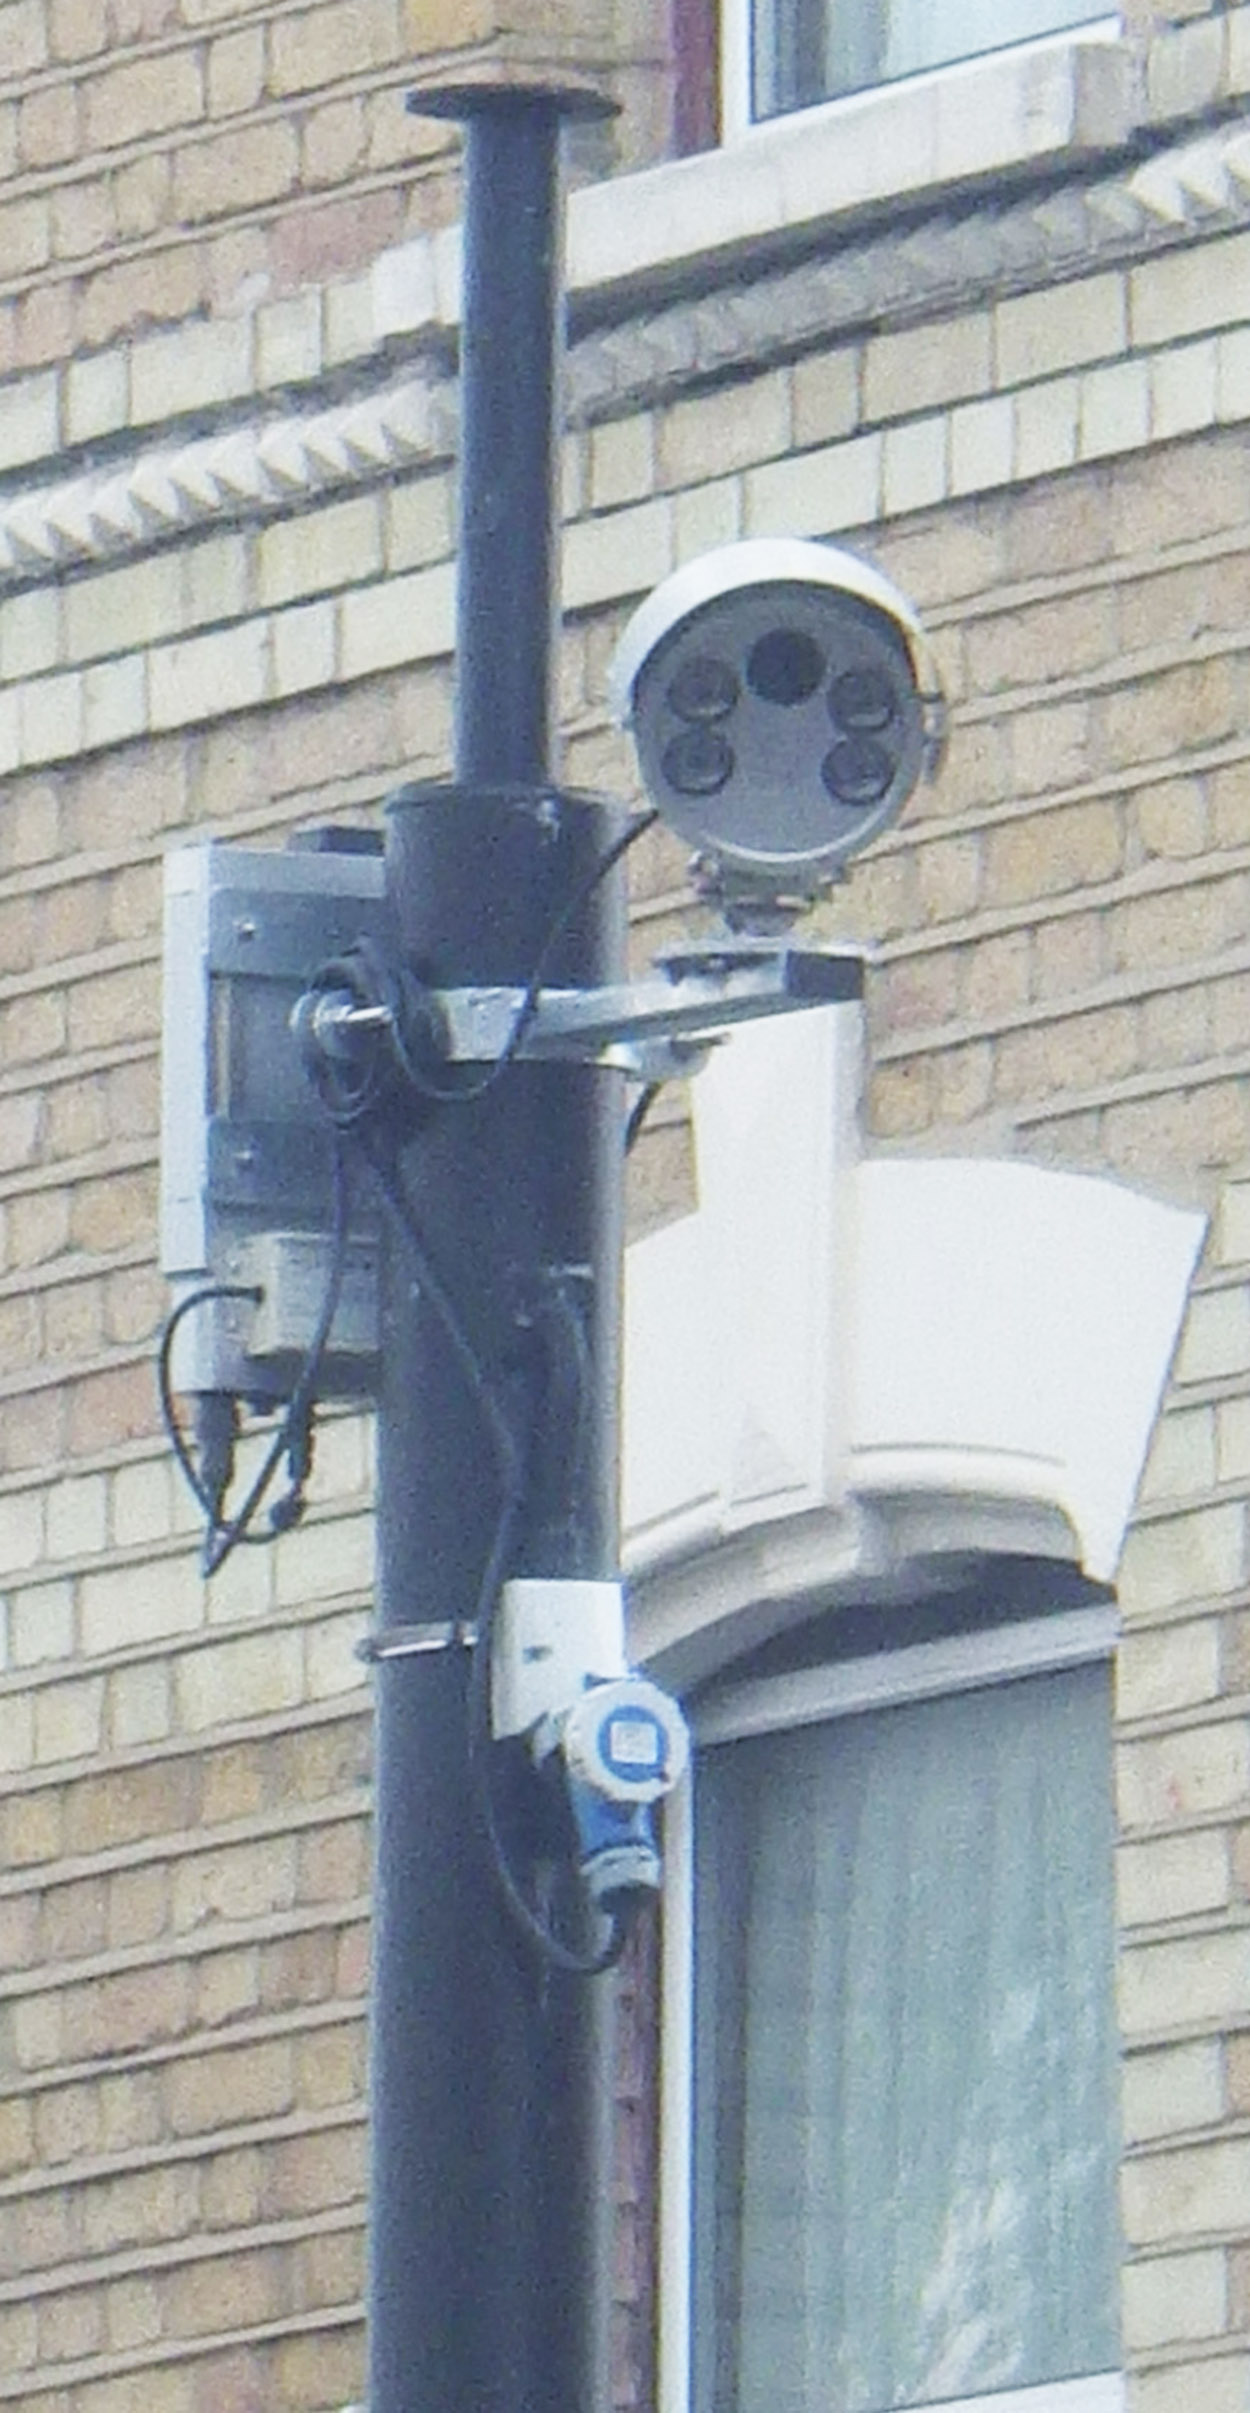 APCOA Lanewatch CCTV cameras 